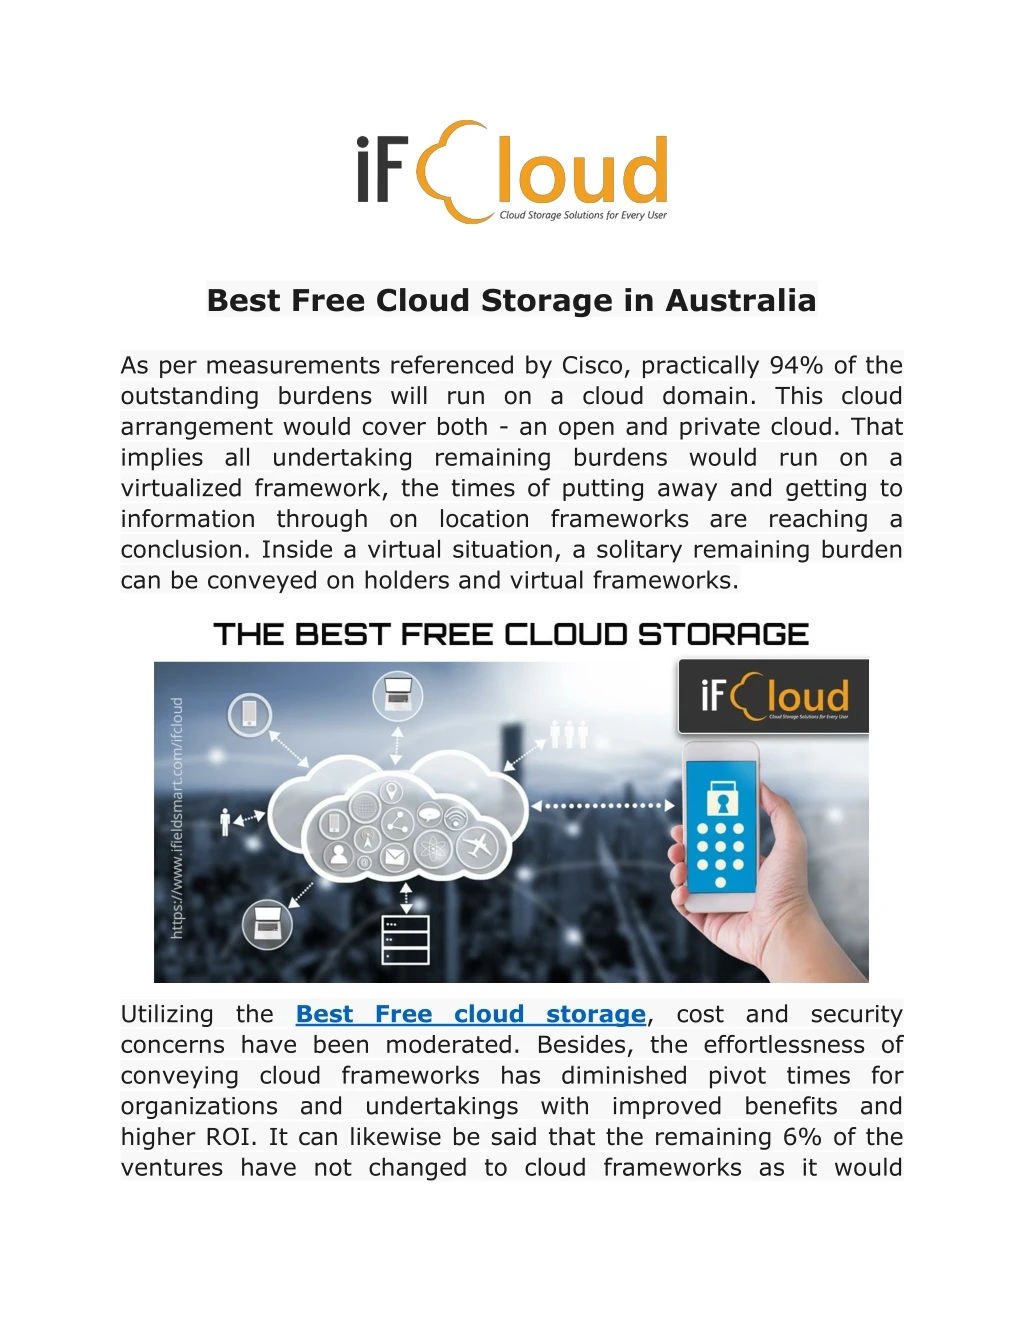 best free cloud storage in australia